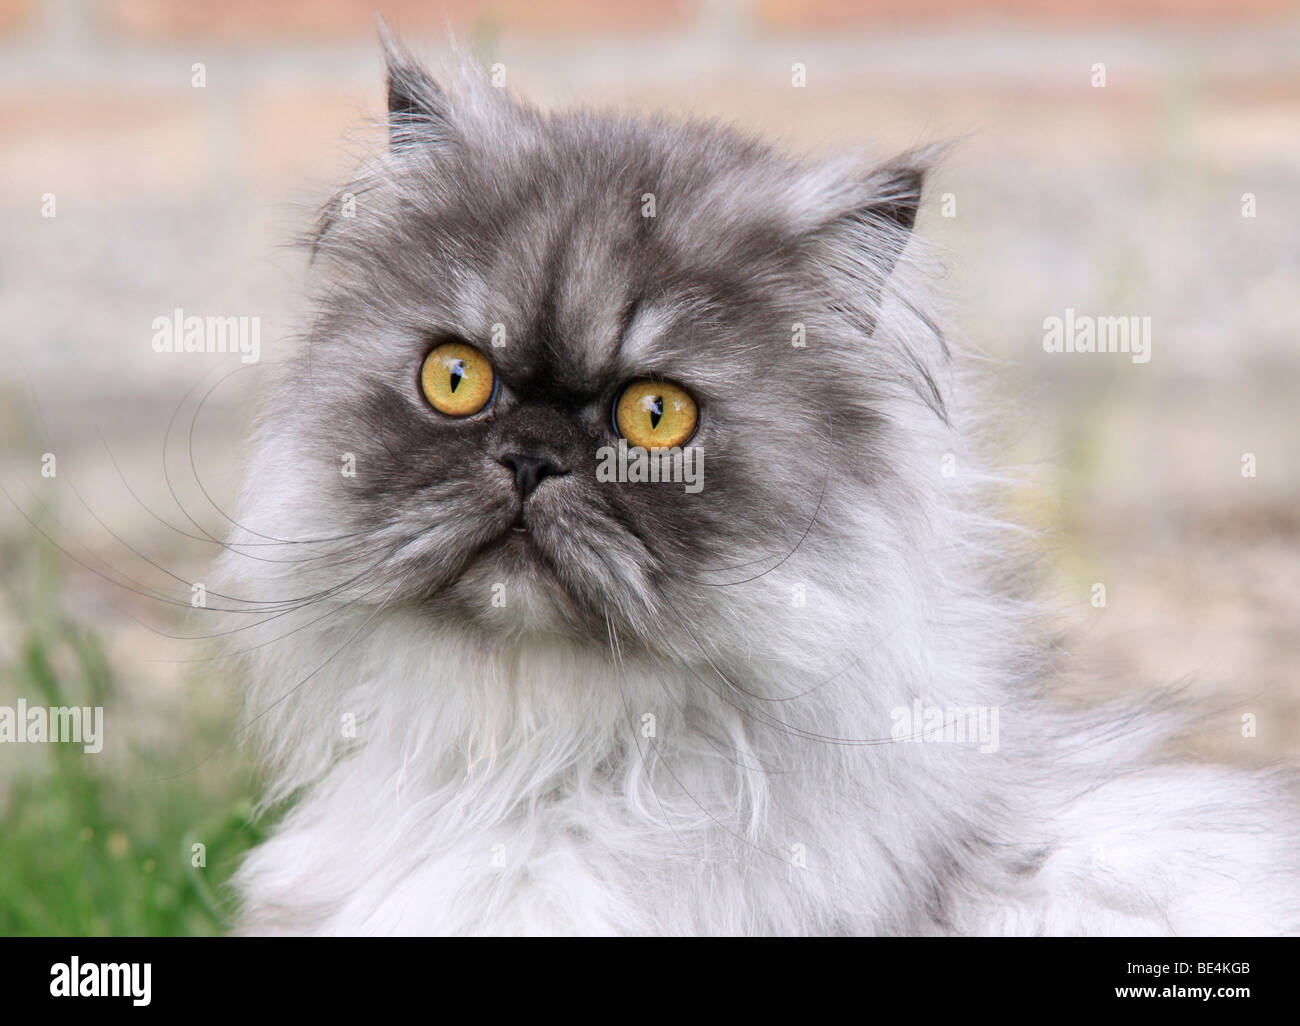 Gray Persian cat, portrait Stock Photo